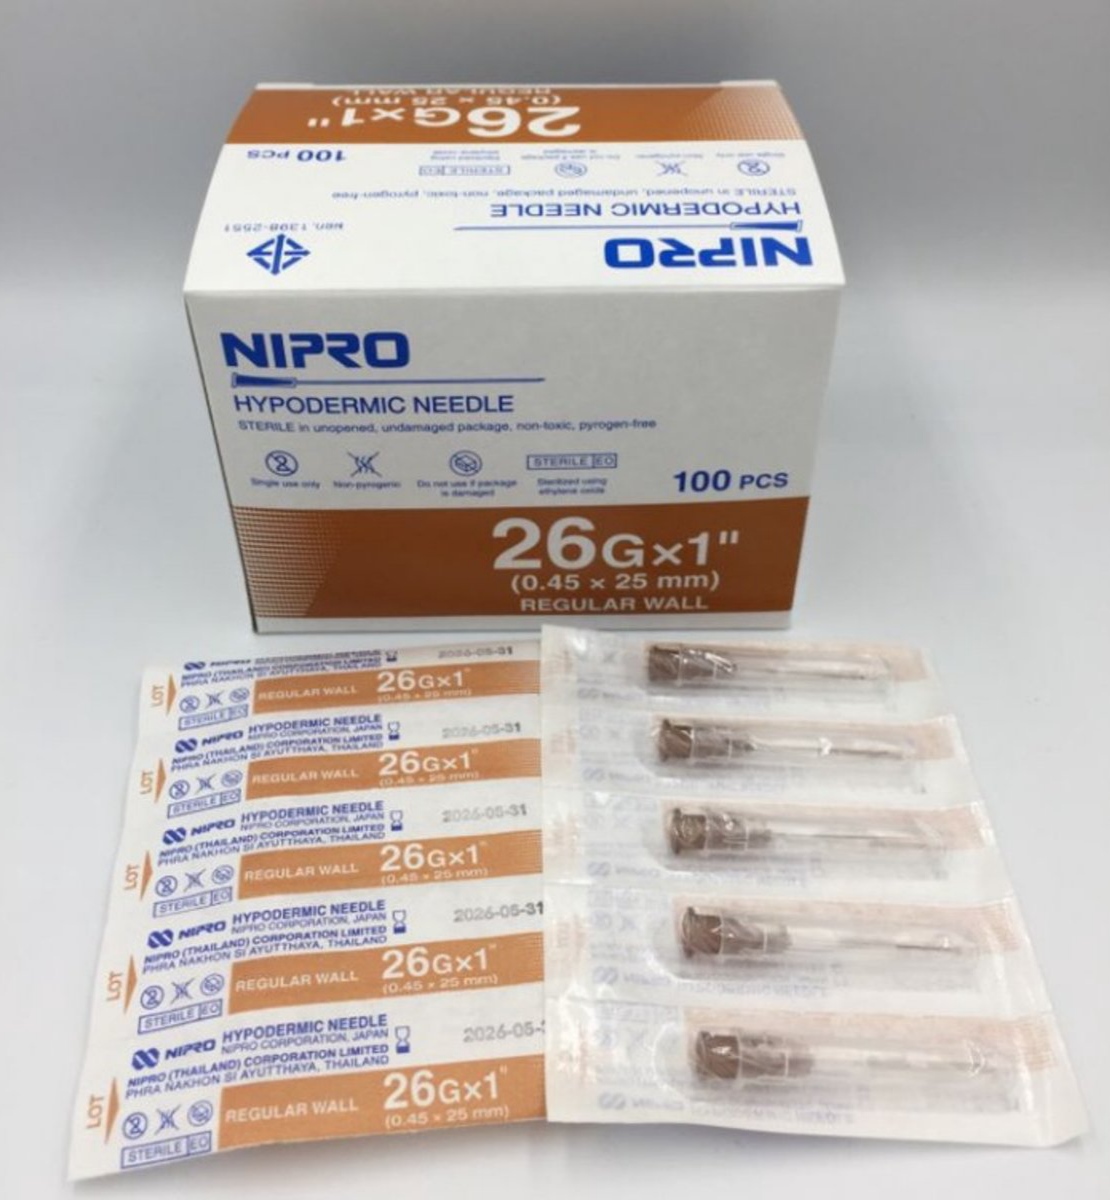 NIPRO เข็มฉีดยา ขนาด 26G x 1 นิ้ว (ซอง)